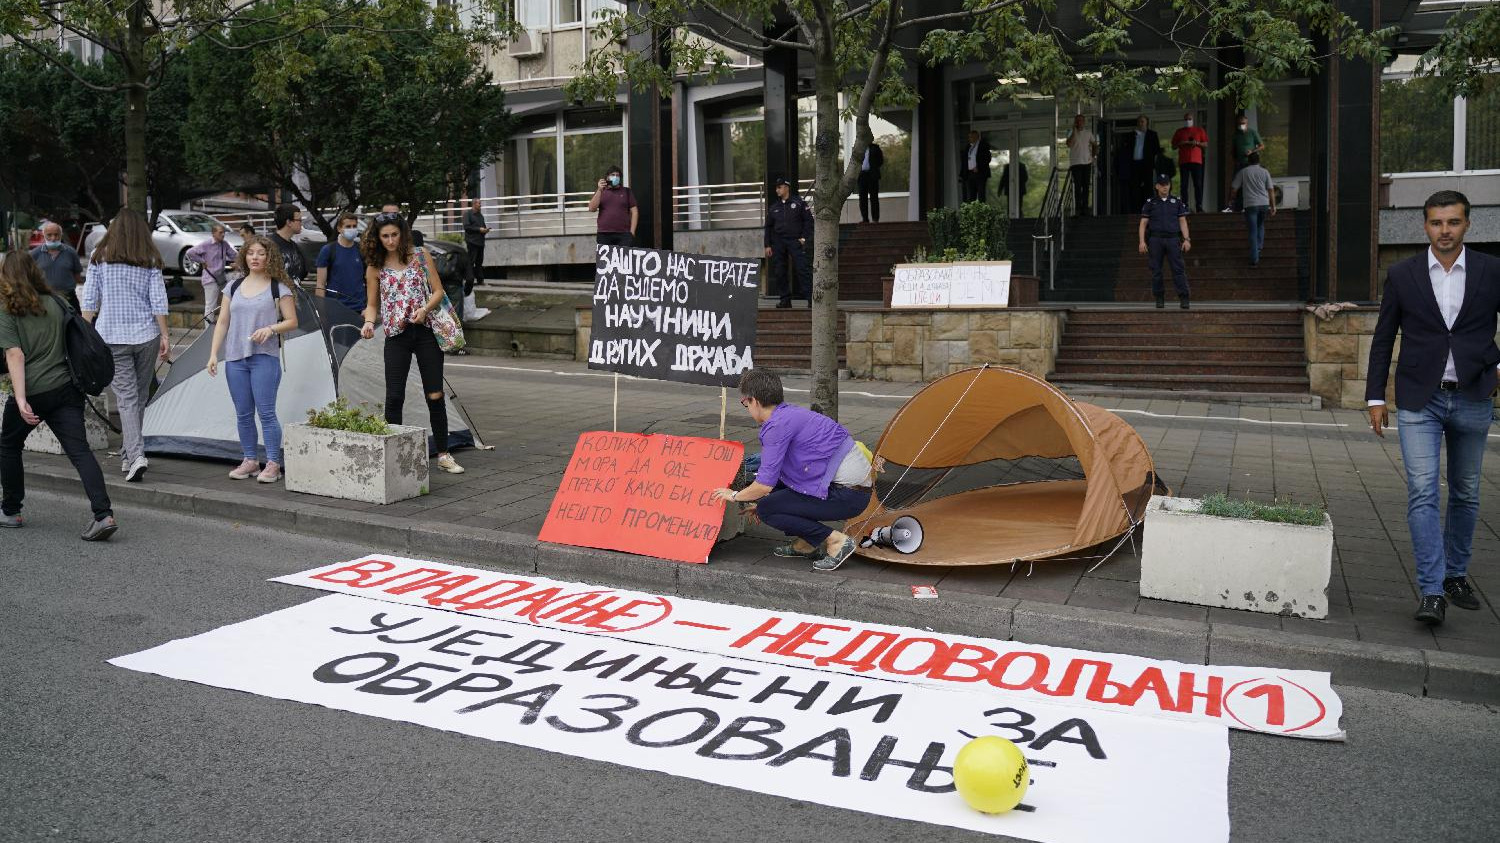 Završena tročasovna studentska blokada Nemanjine ulice i zgrade Ministarstva (FOTO/VIDEO) 1